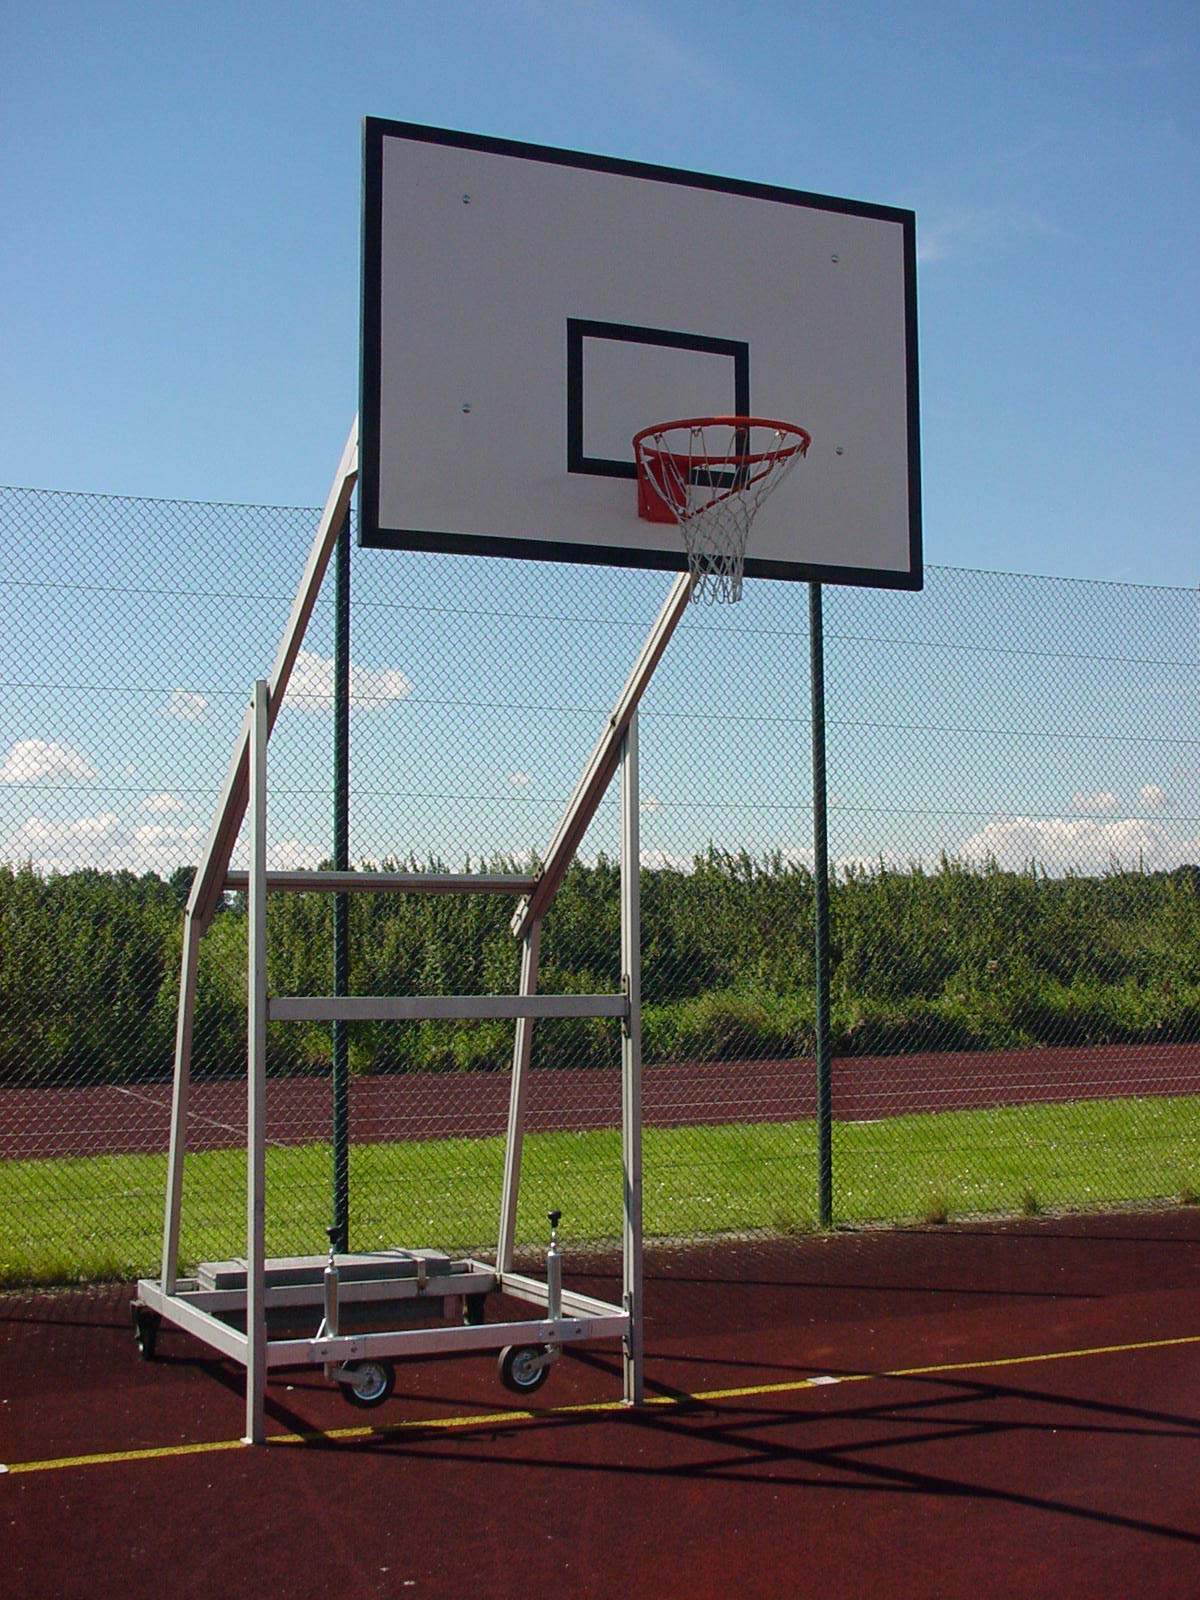 Basketballanlage fahrbar